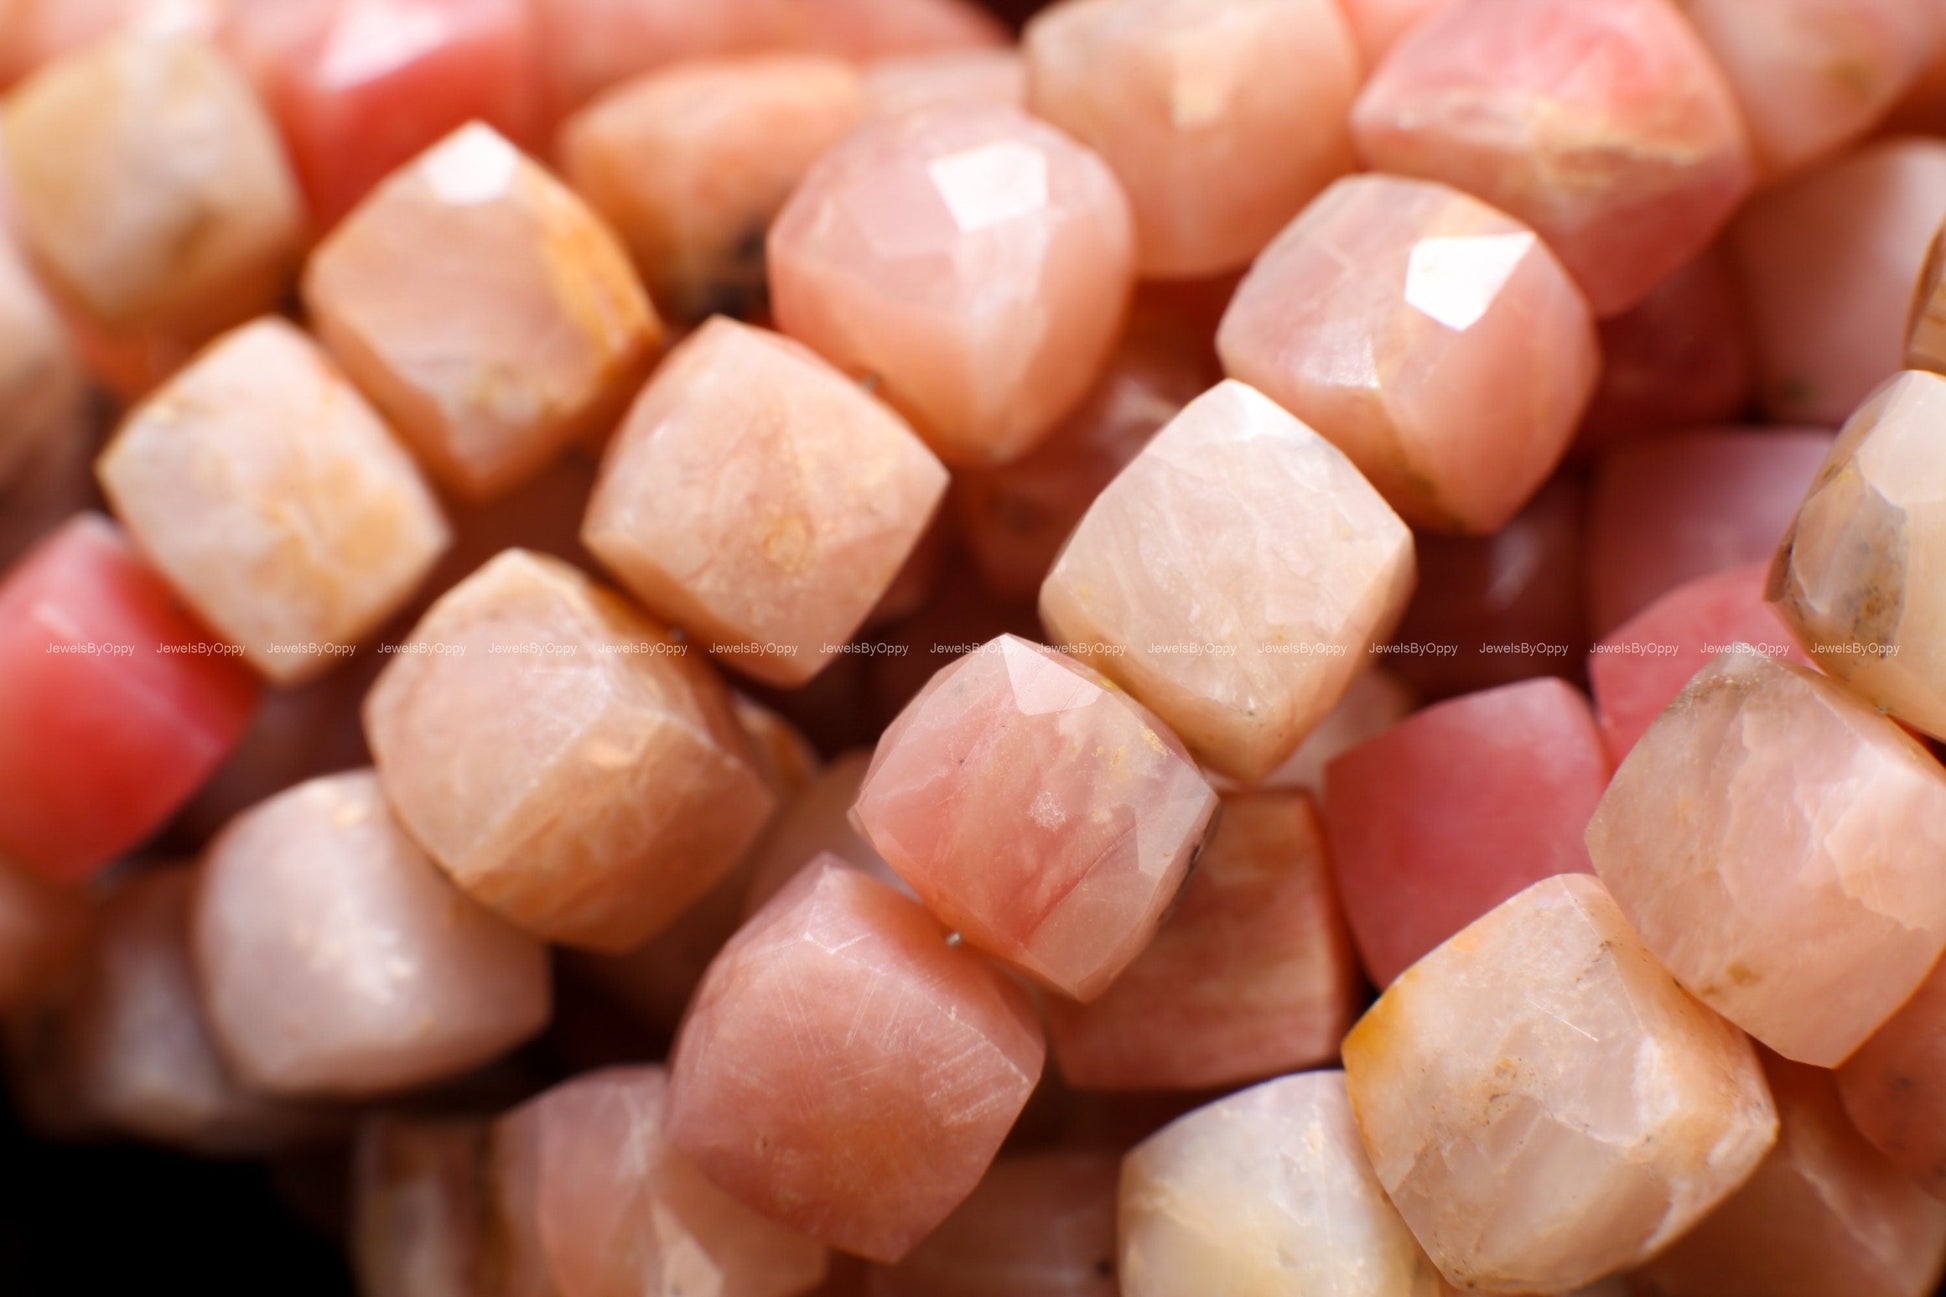 Pink Peruvian Opal 7.5-8mm Dice shape Cube Gemstone Beads, High Quality Jewelry Making Cube Beads. 8&quot; strand